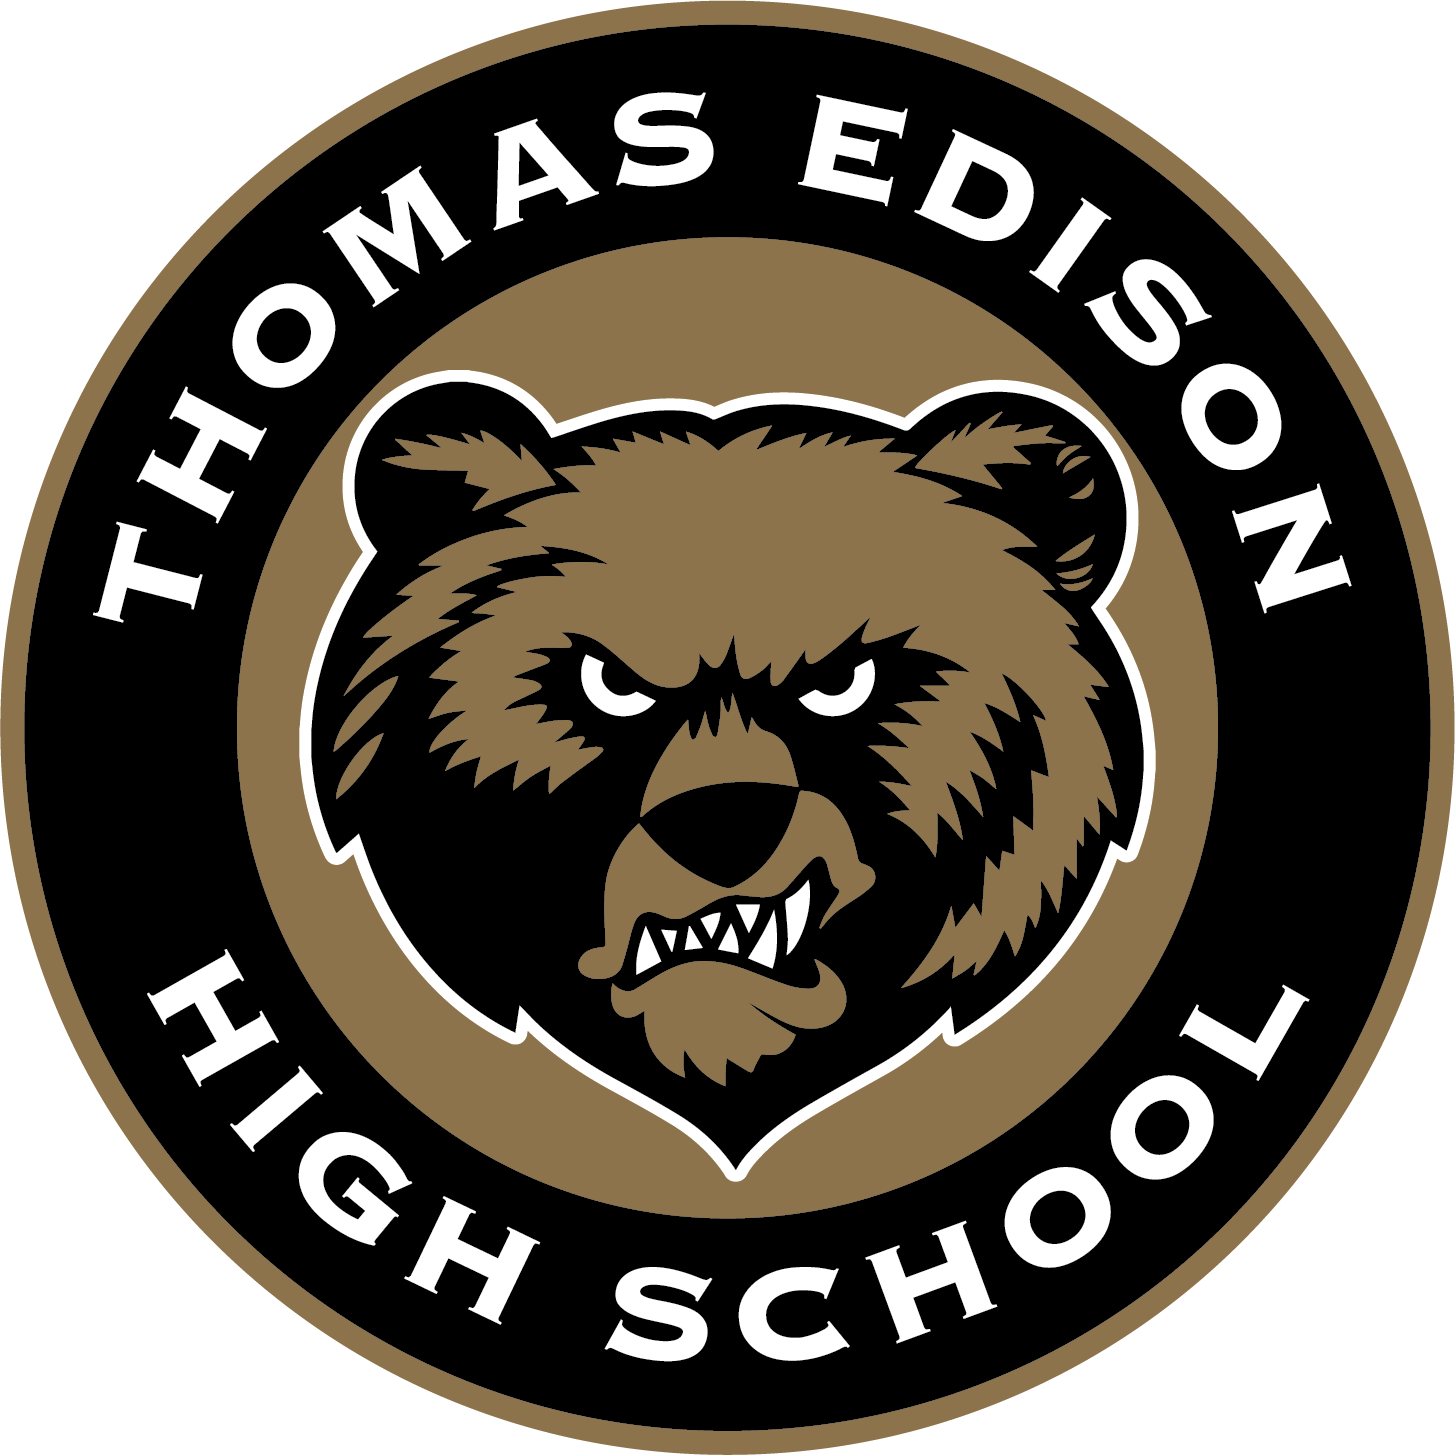 Edison Logo